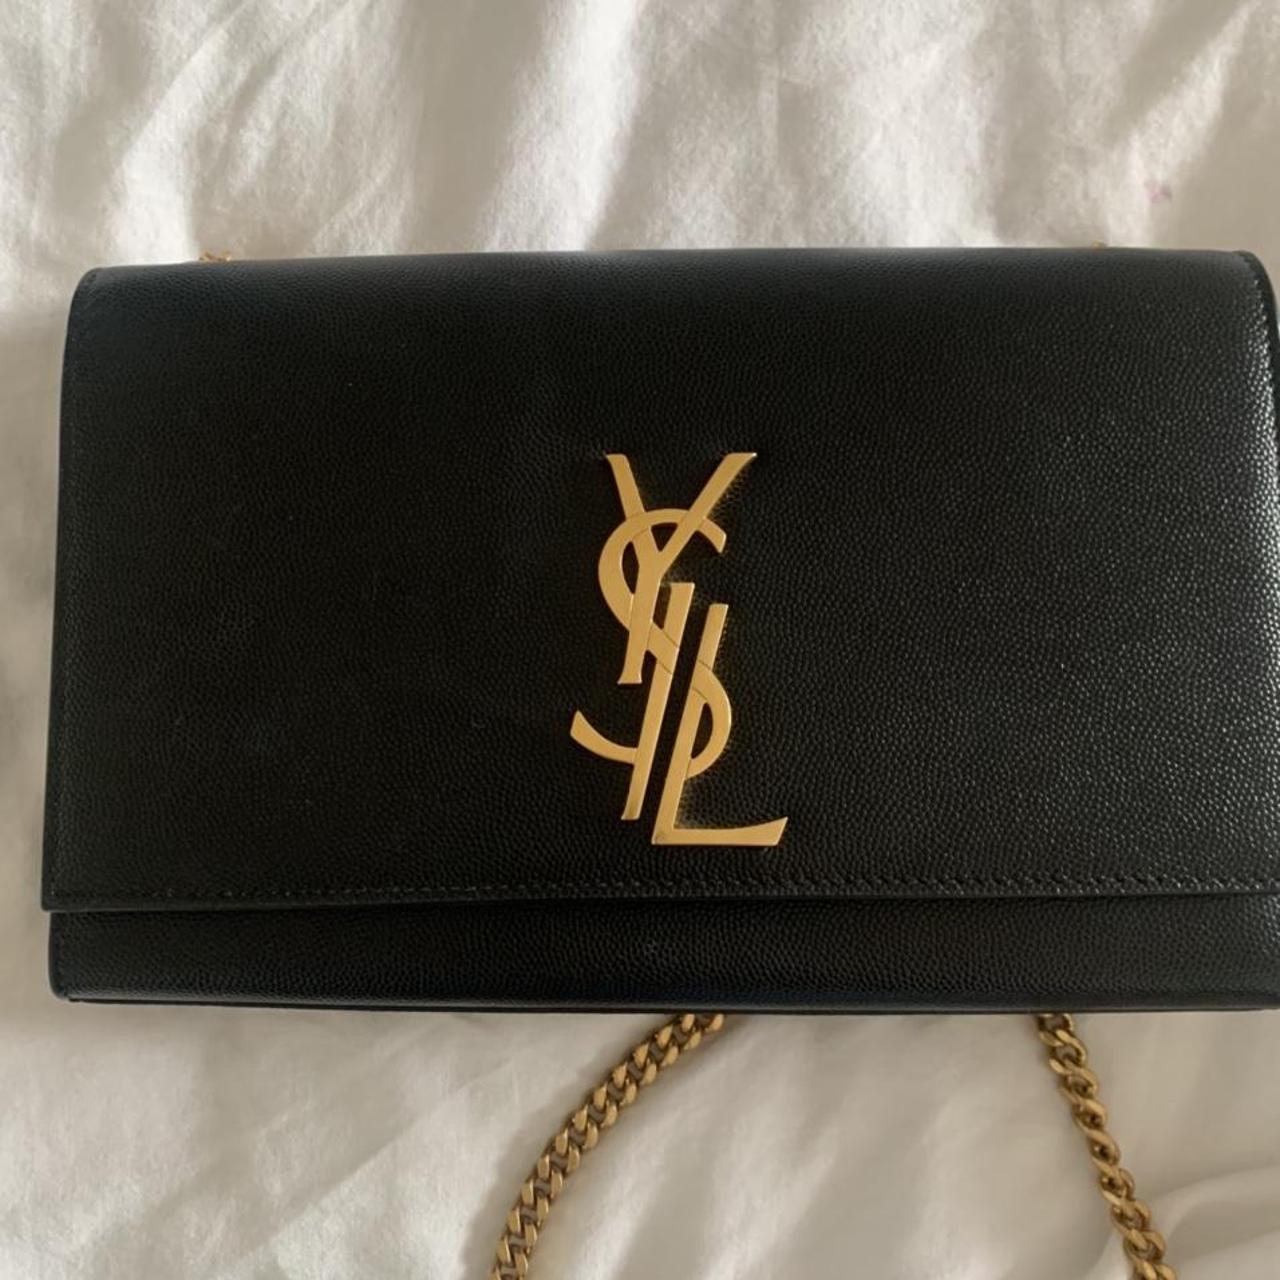 YSL Kate medium monogramme bag in black leather with... - Depop